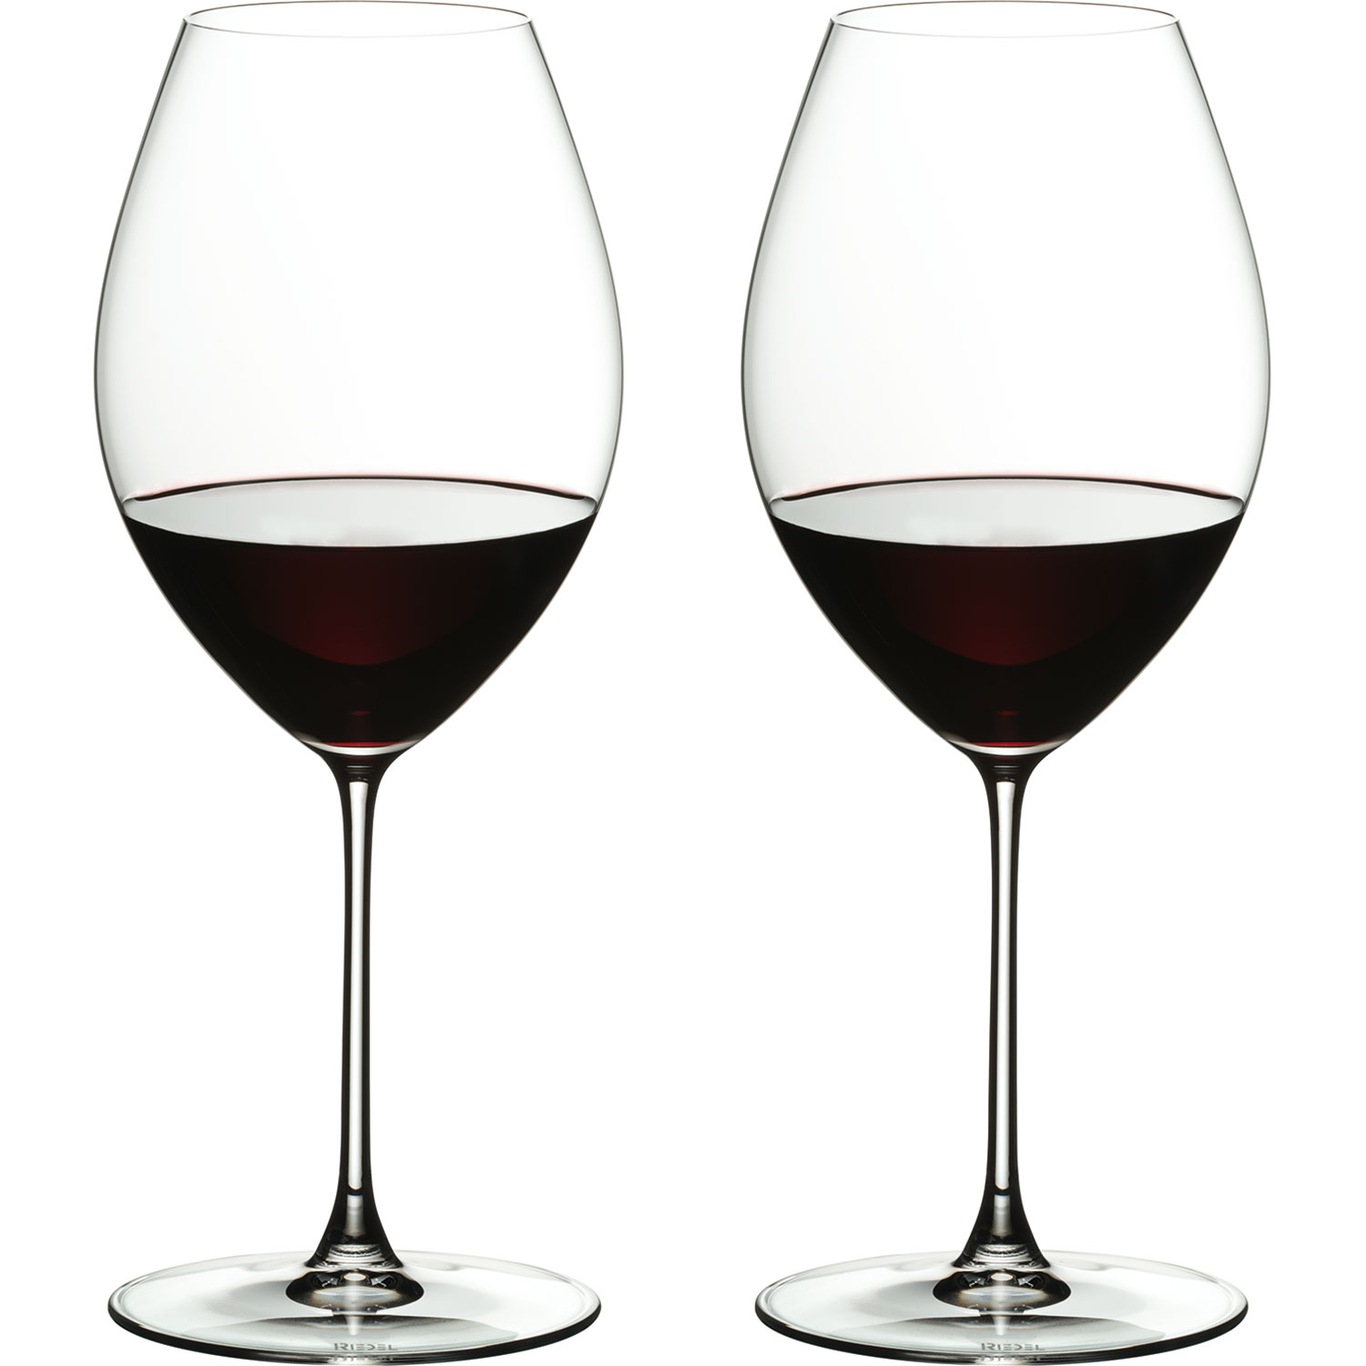 Veritas Old World Syrah Wine Glass 2-pack